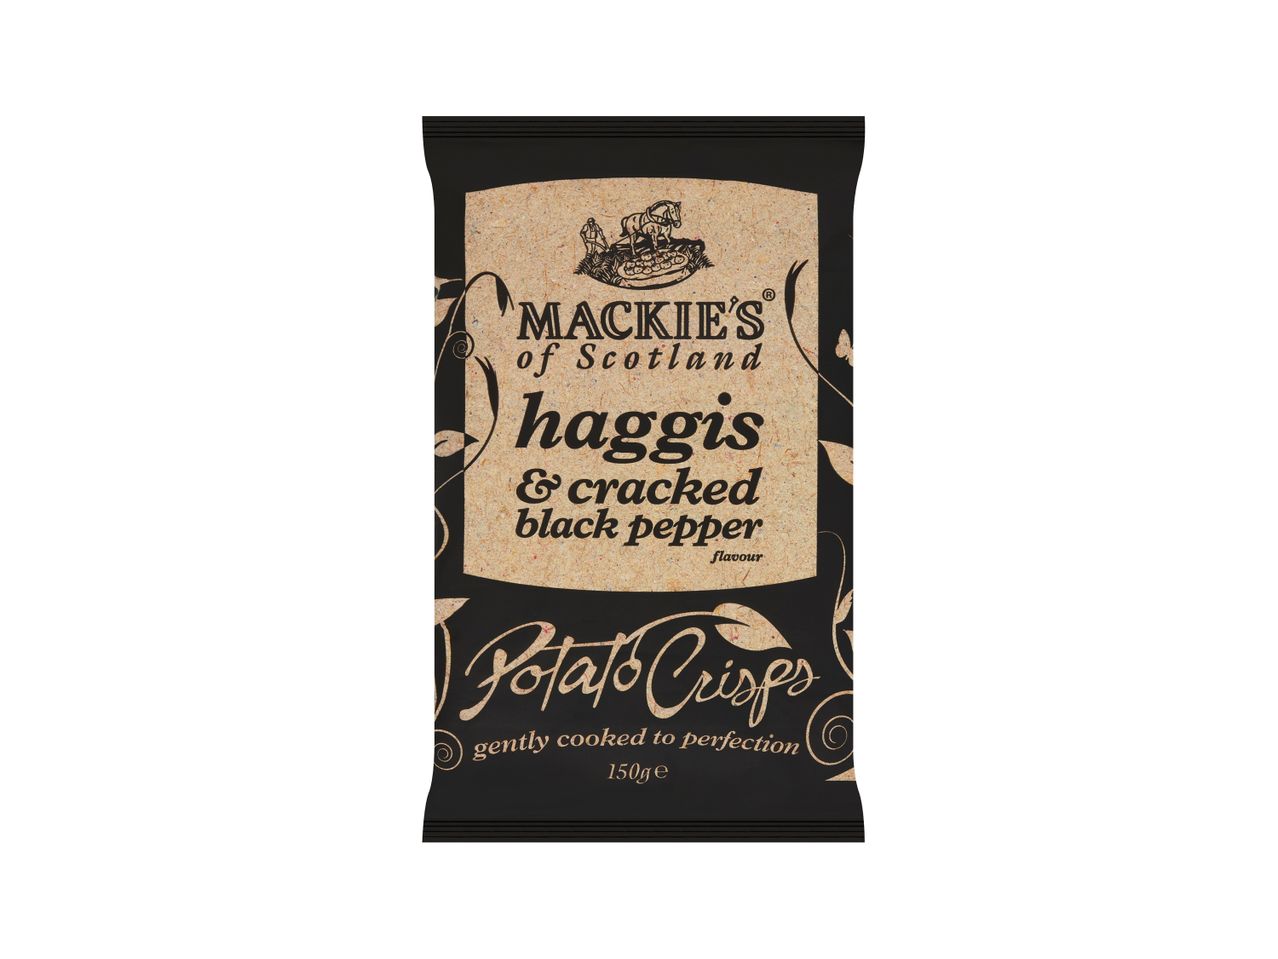 Go to full screen view: Mackie's Scottish Crisps - Image 2